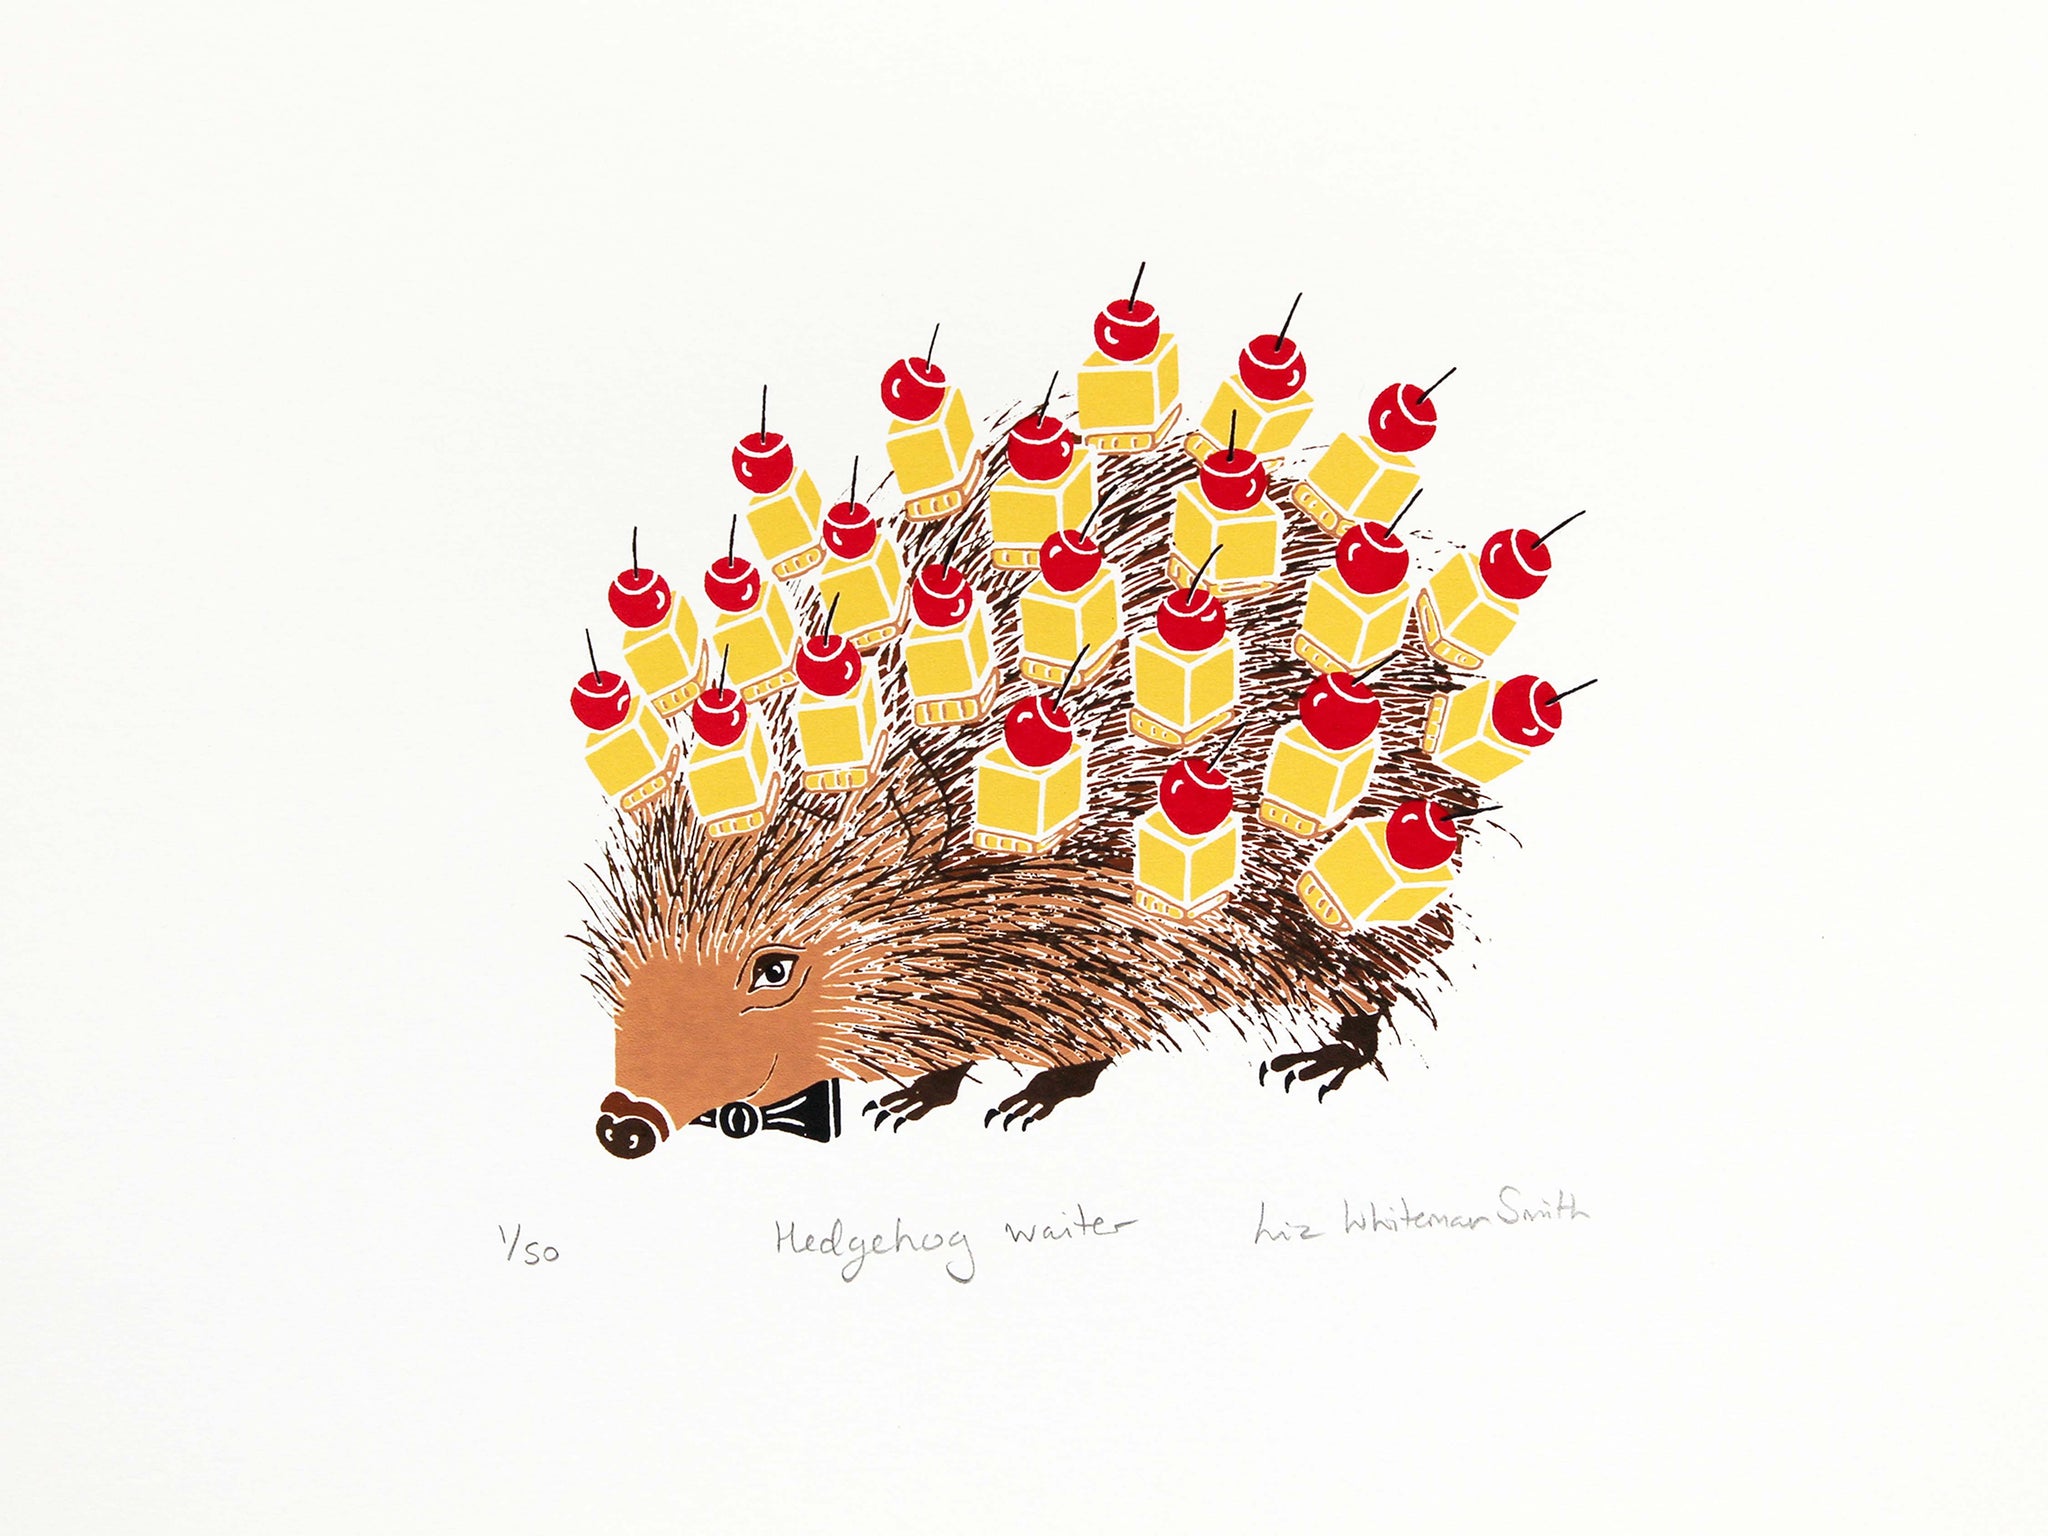 Hedgehog waiter